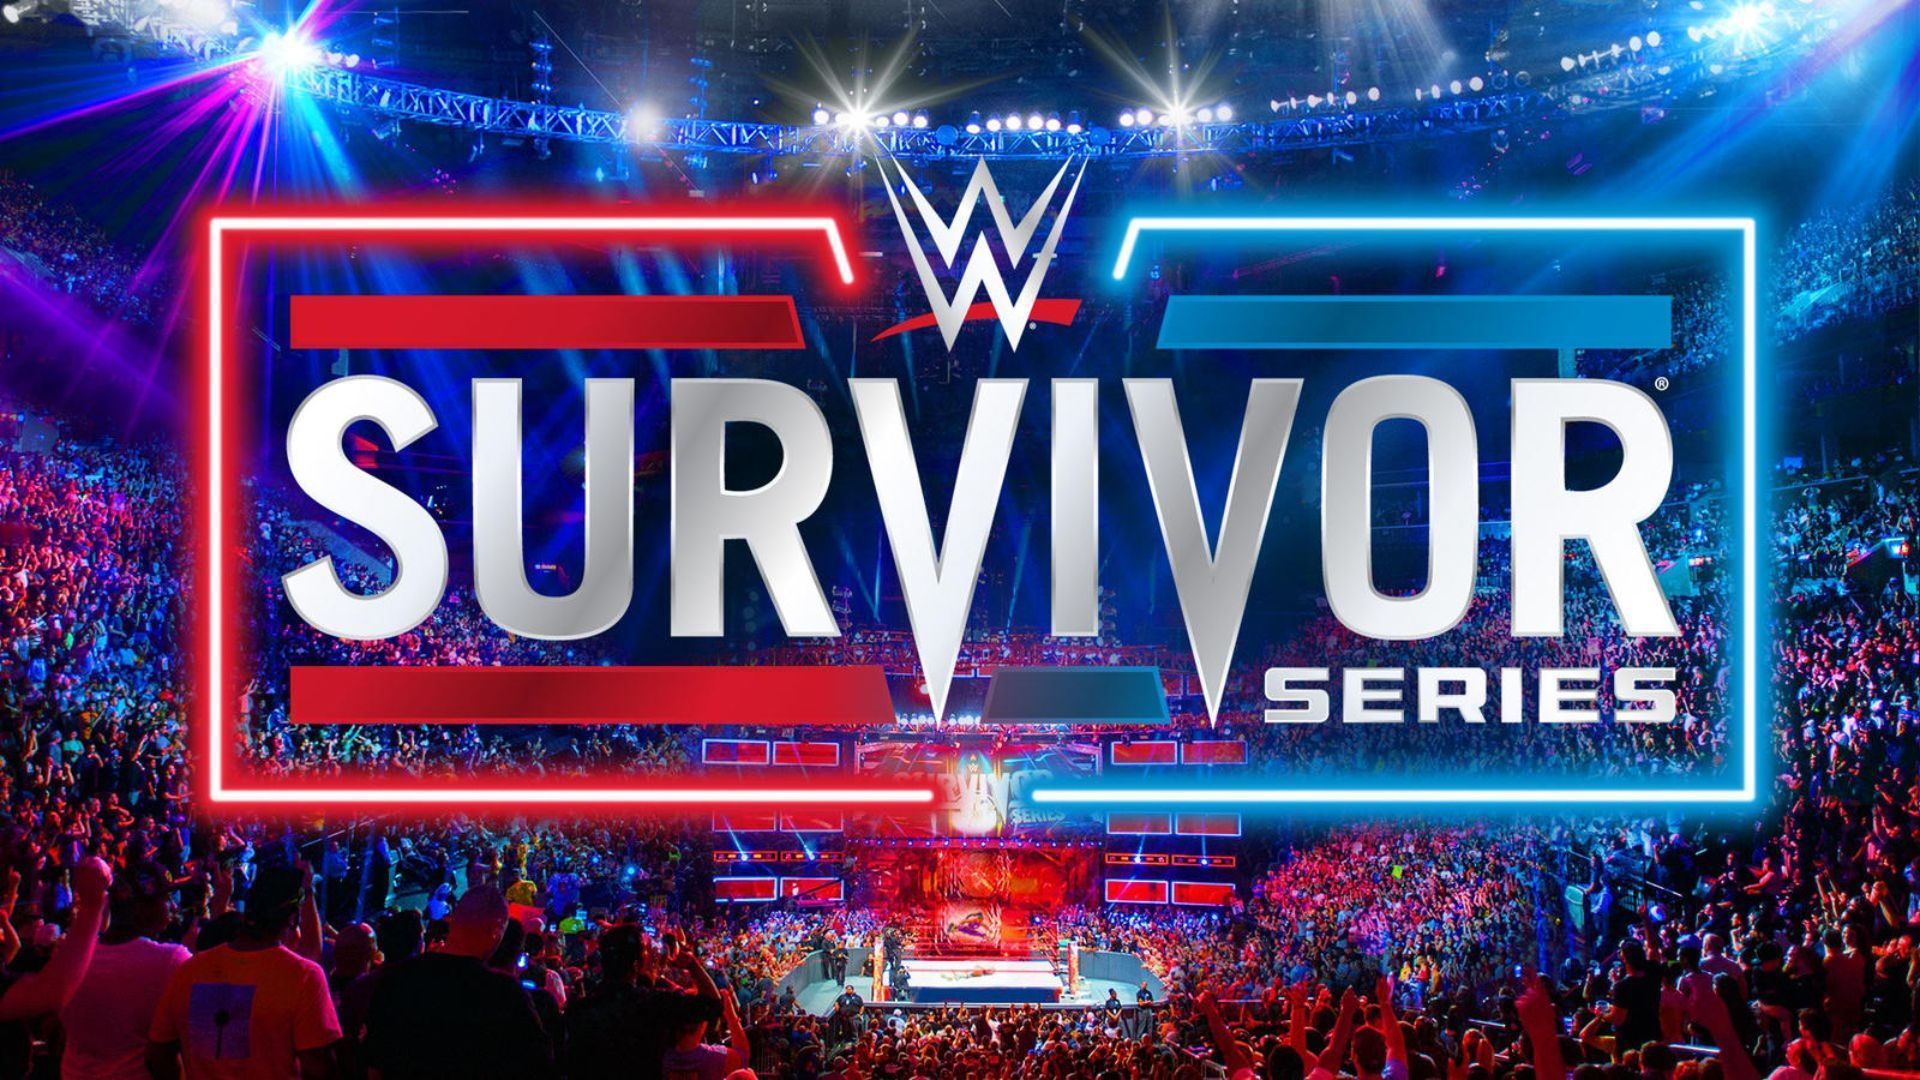 WWE Survivor Series will happen in Chicago this year!